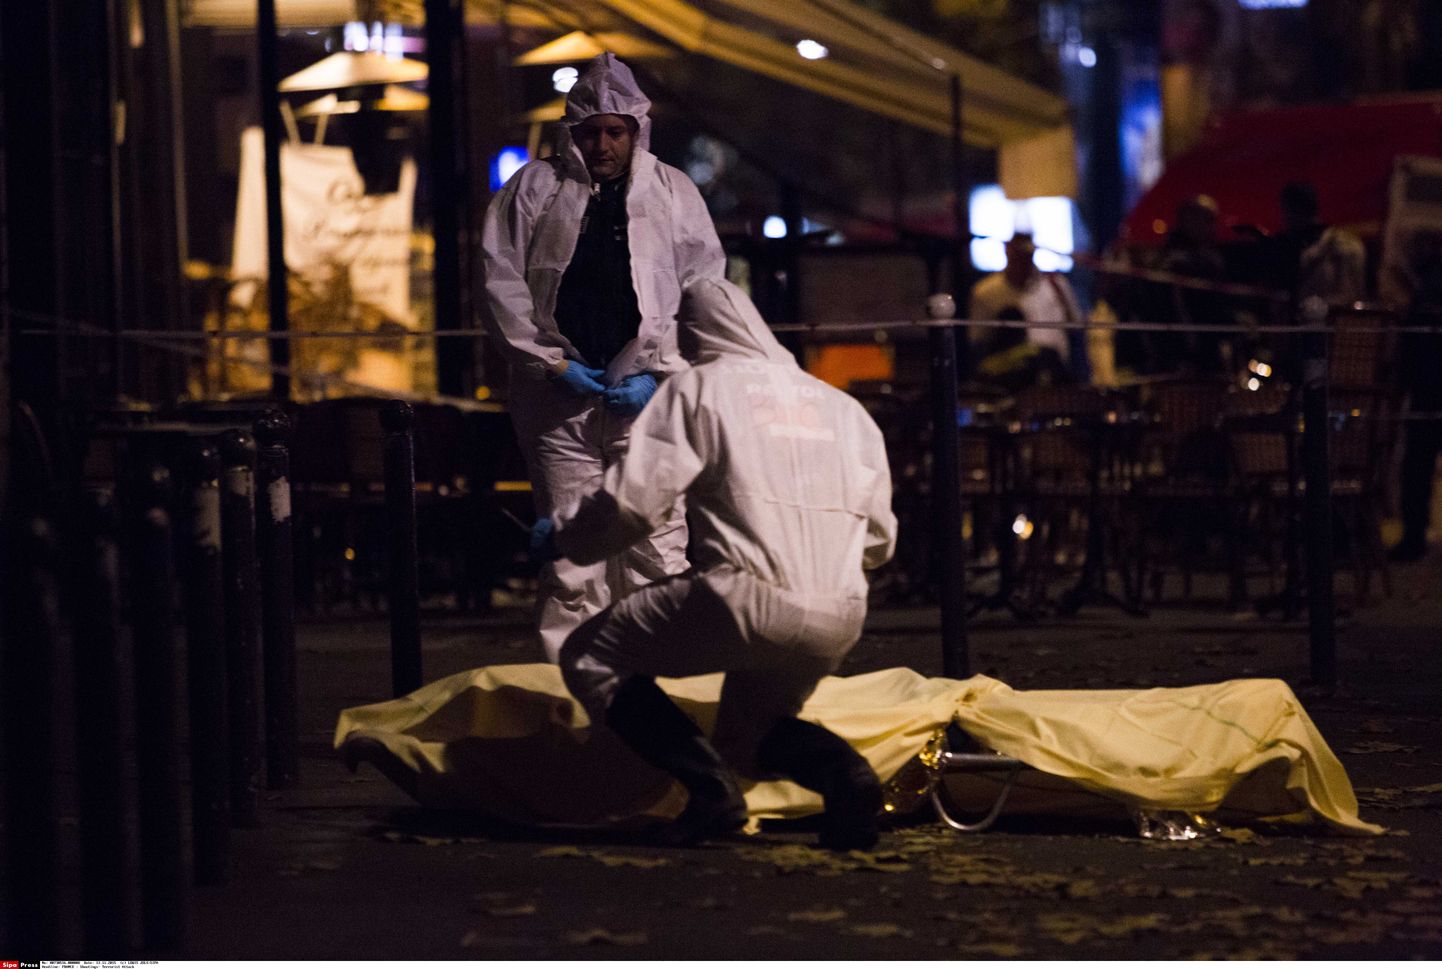 Pariisis toimus 13. novembril 2015 terrorirünnak